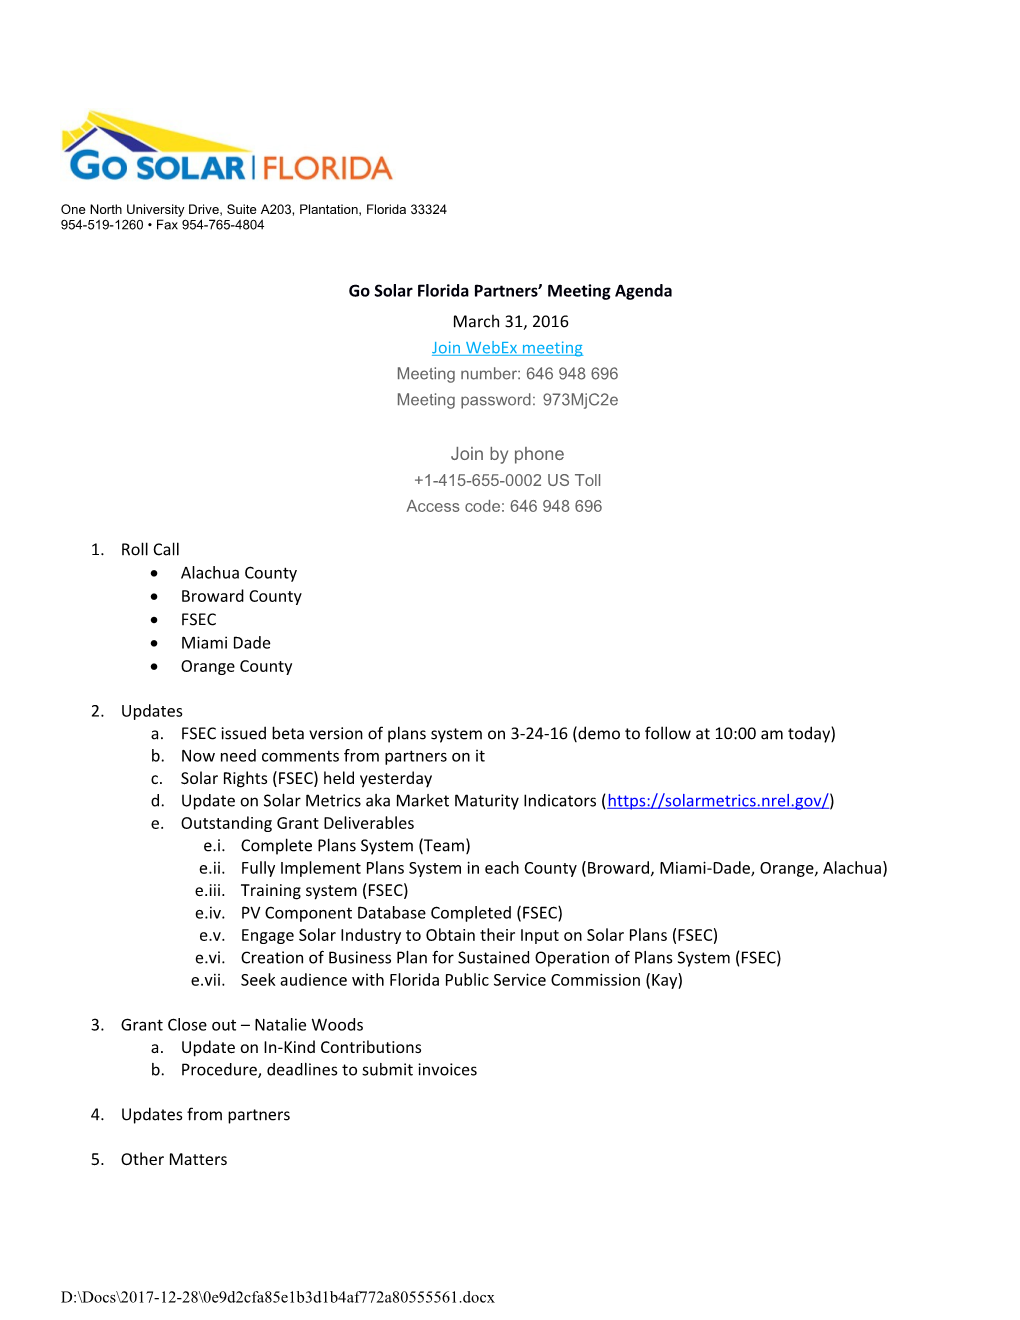 Go Solar Florida Partners Meeting Agenda